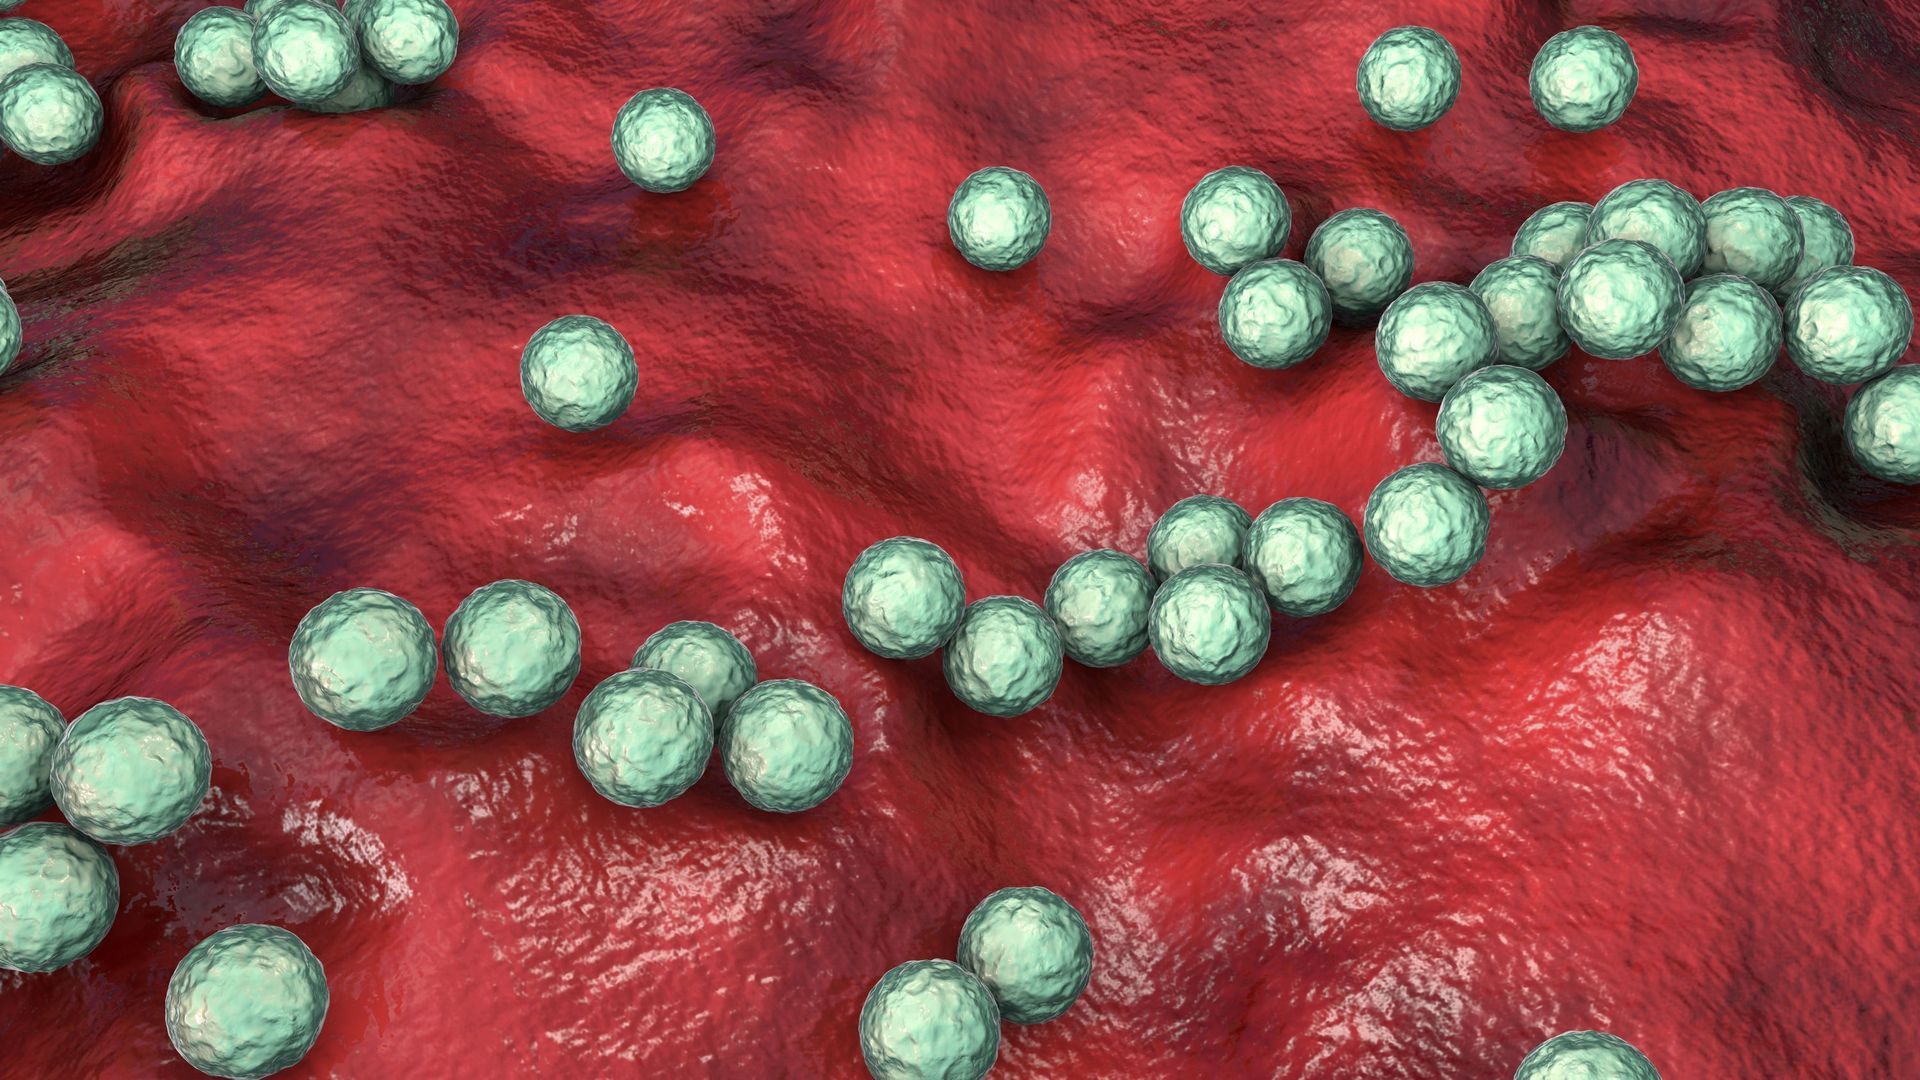 Streptococcus pyogenes bacteria, illustration.